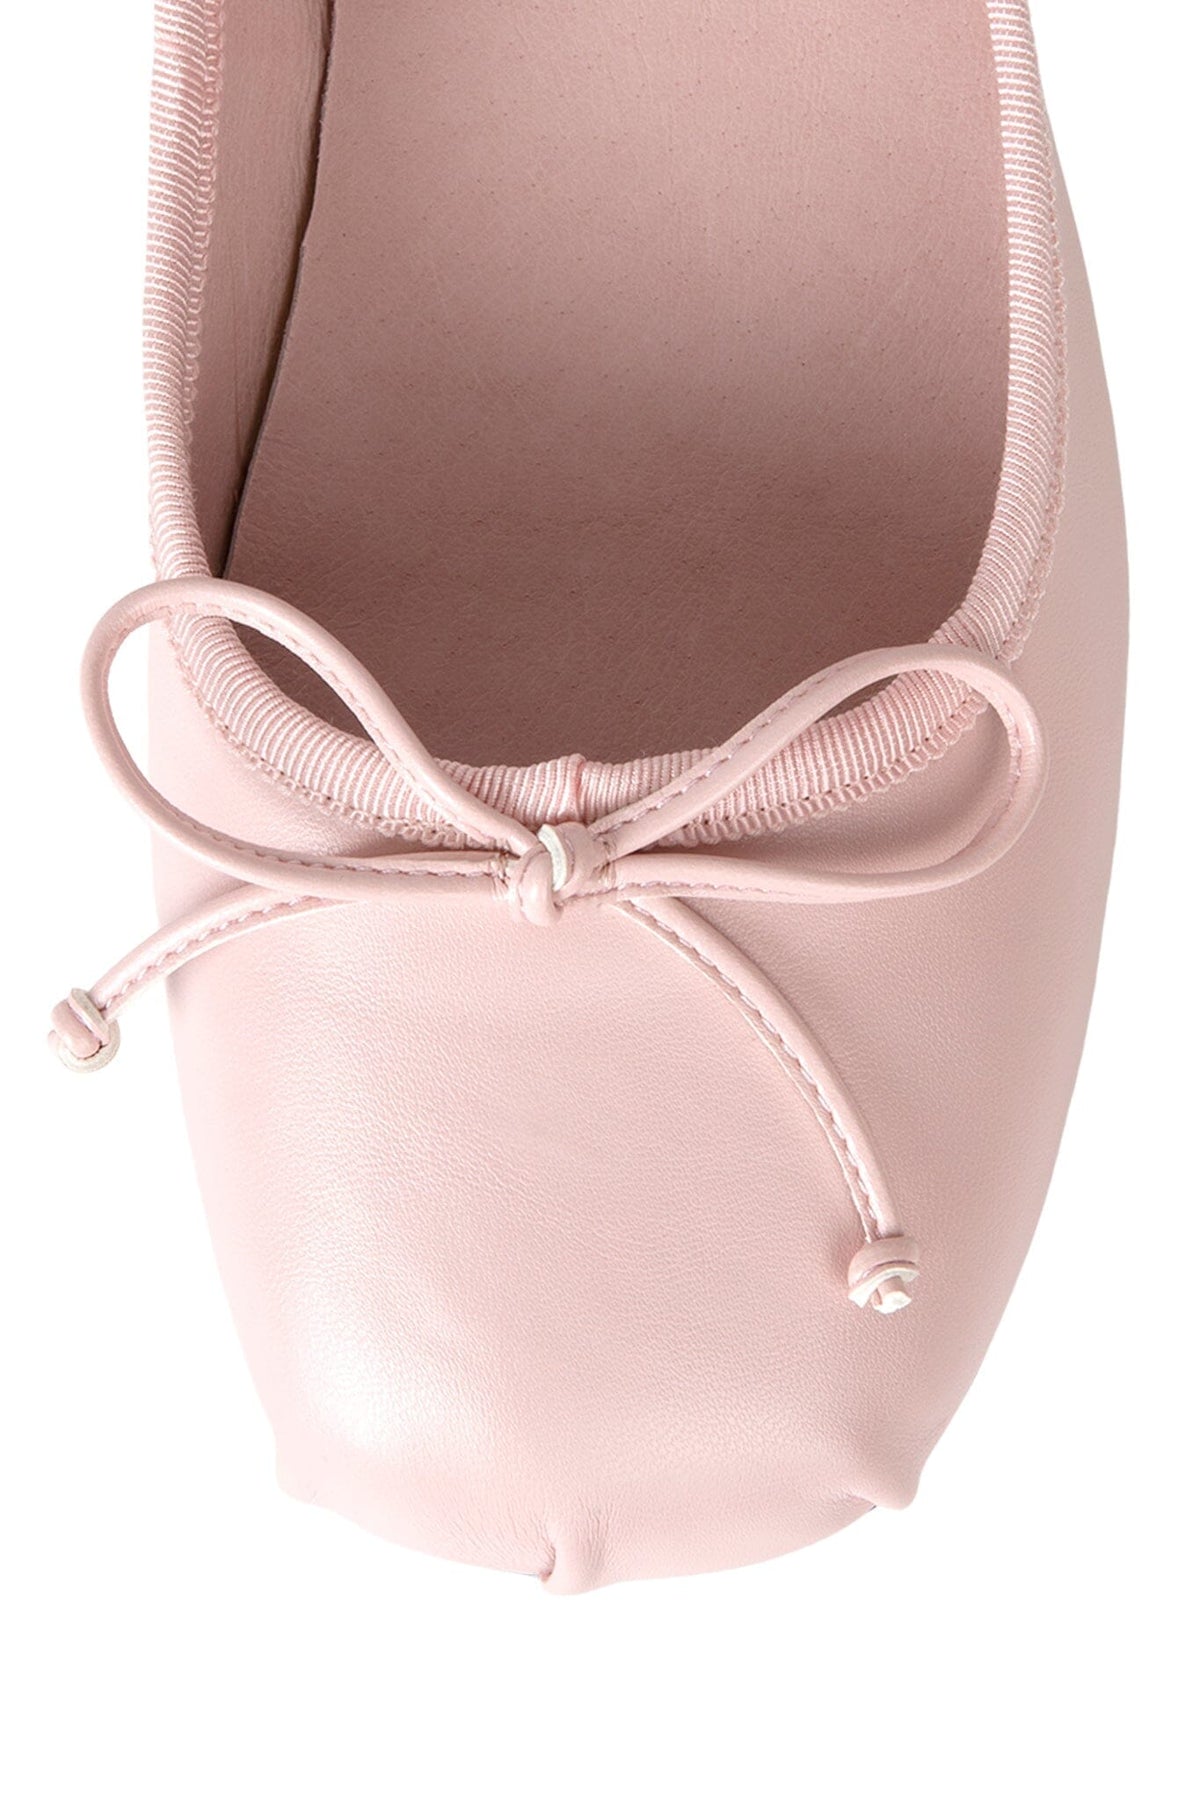 TUTU Jeffrey Campbell Ballet Flats Pink